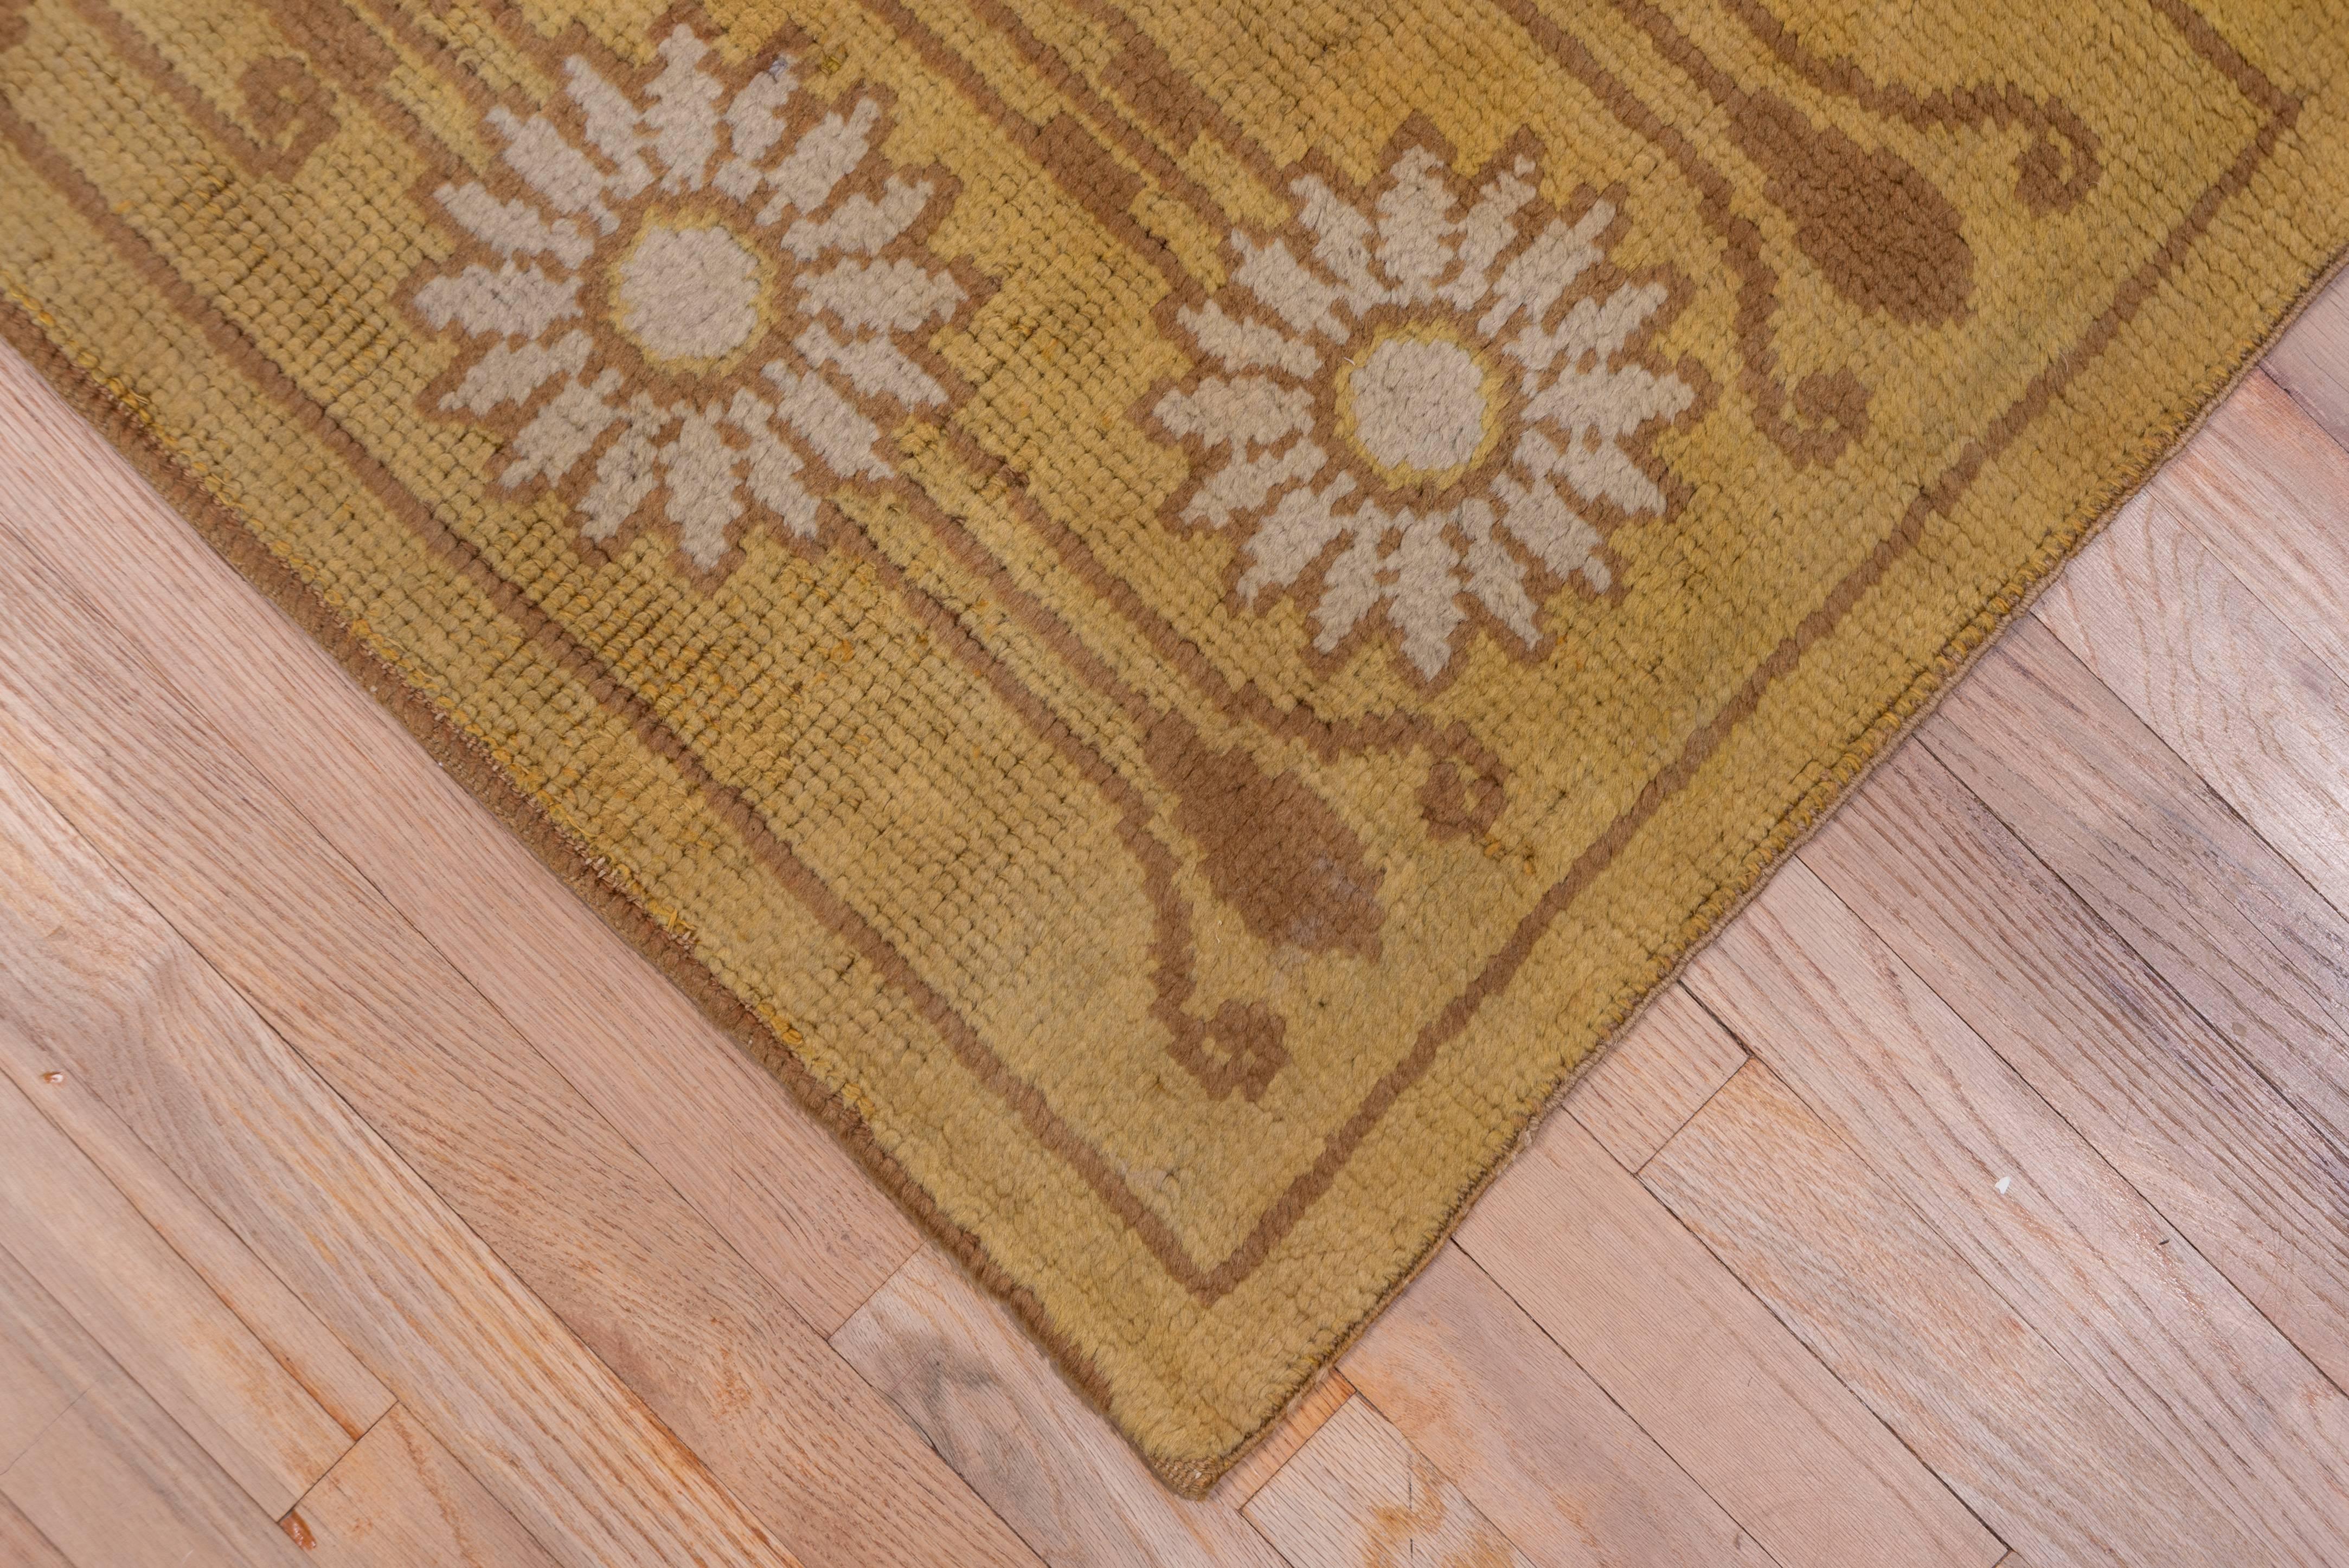 Spanish Turn-of-the-Century Art Nouveau Carpet For Sale